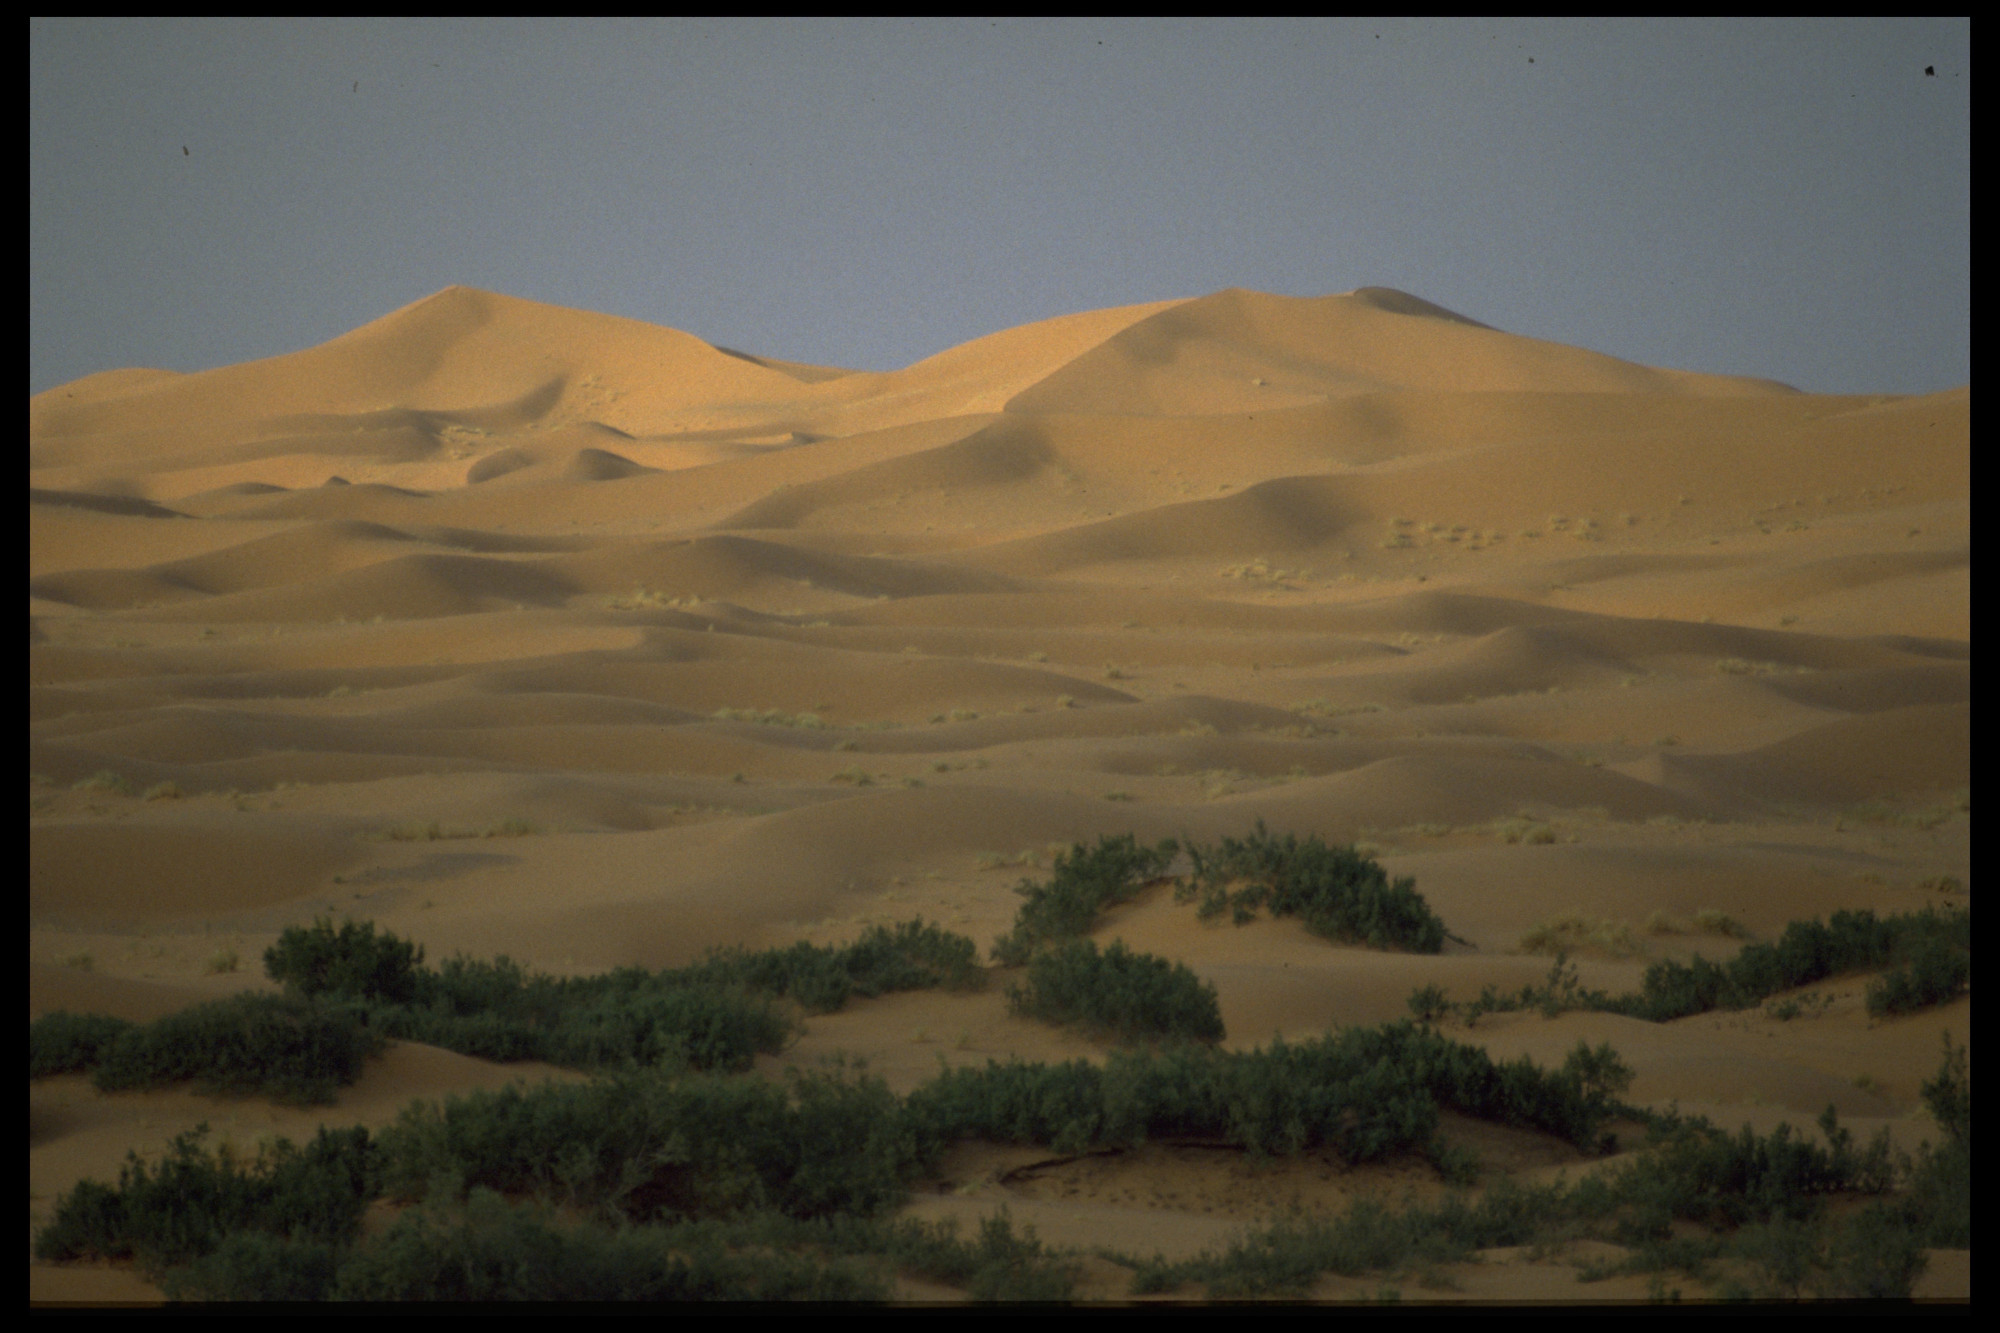 The Morroccan Sahara